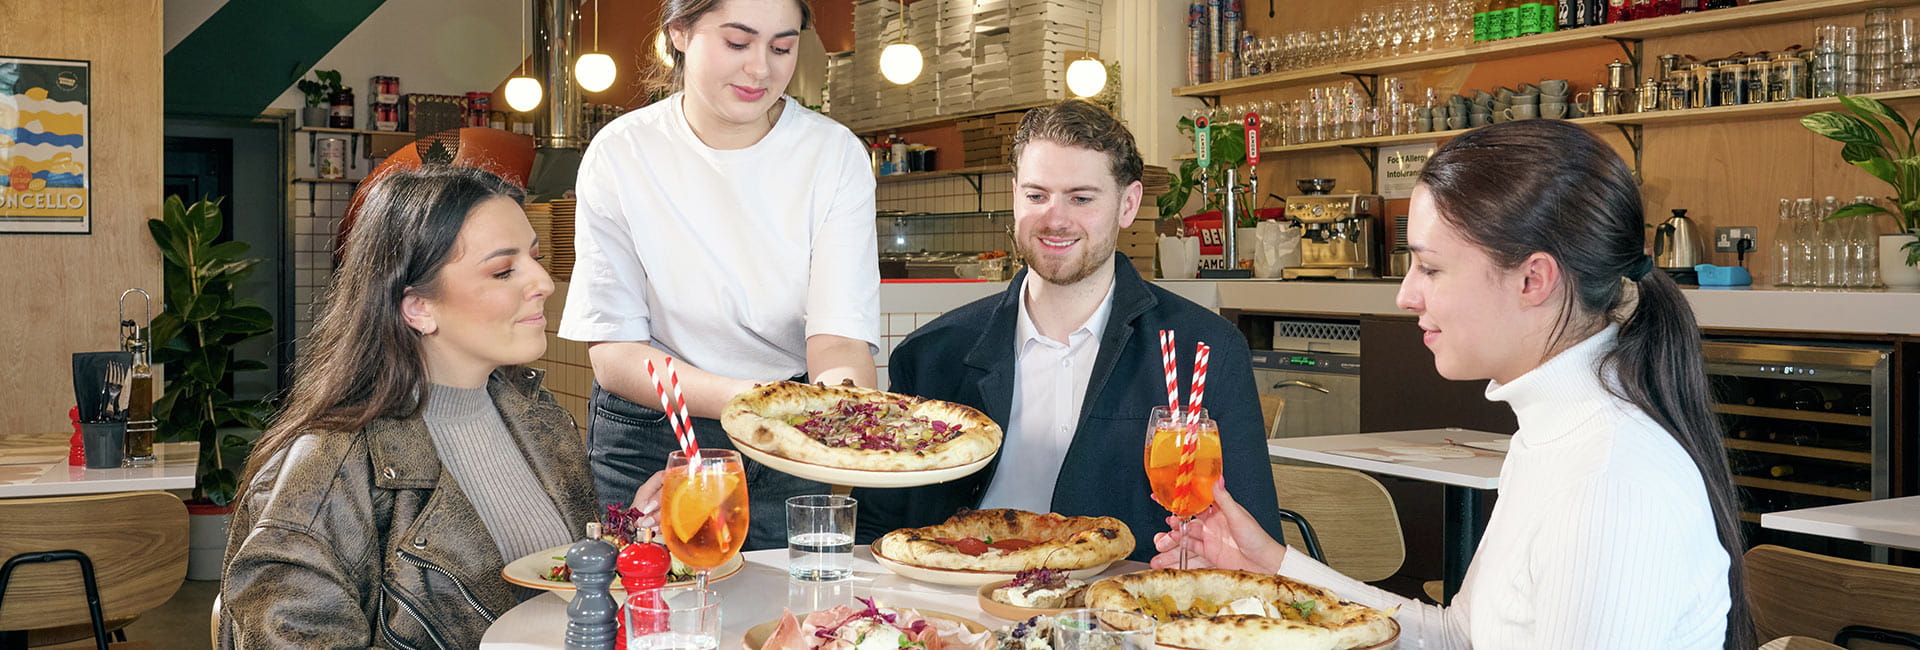 Image of customers enjoying Pizza